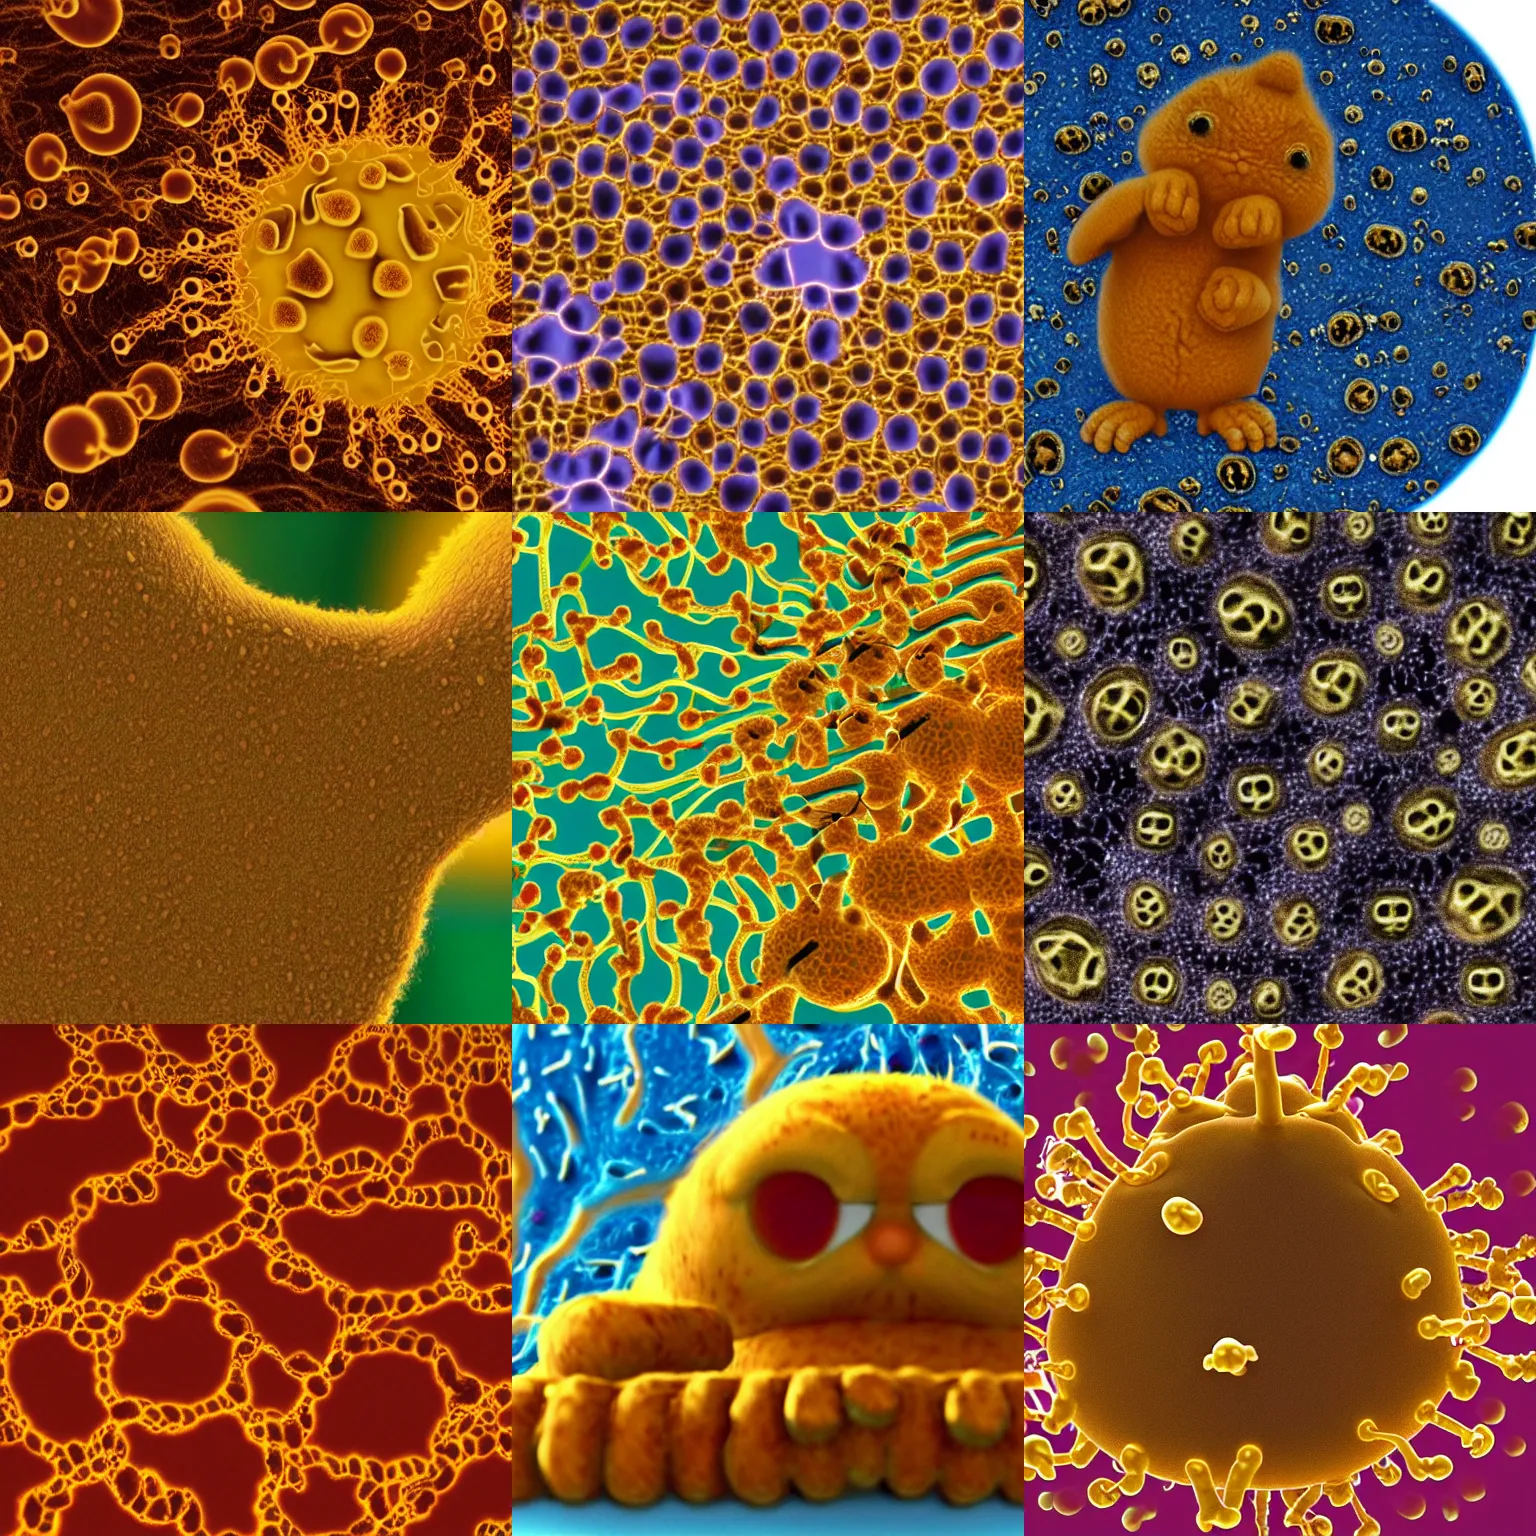 Prompt: Microscopic view of the Garfield virus